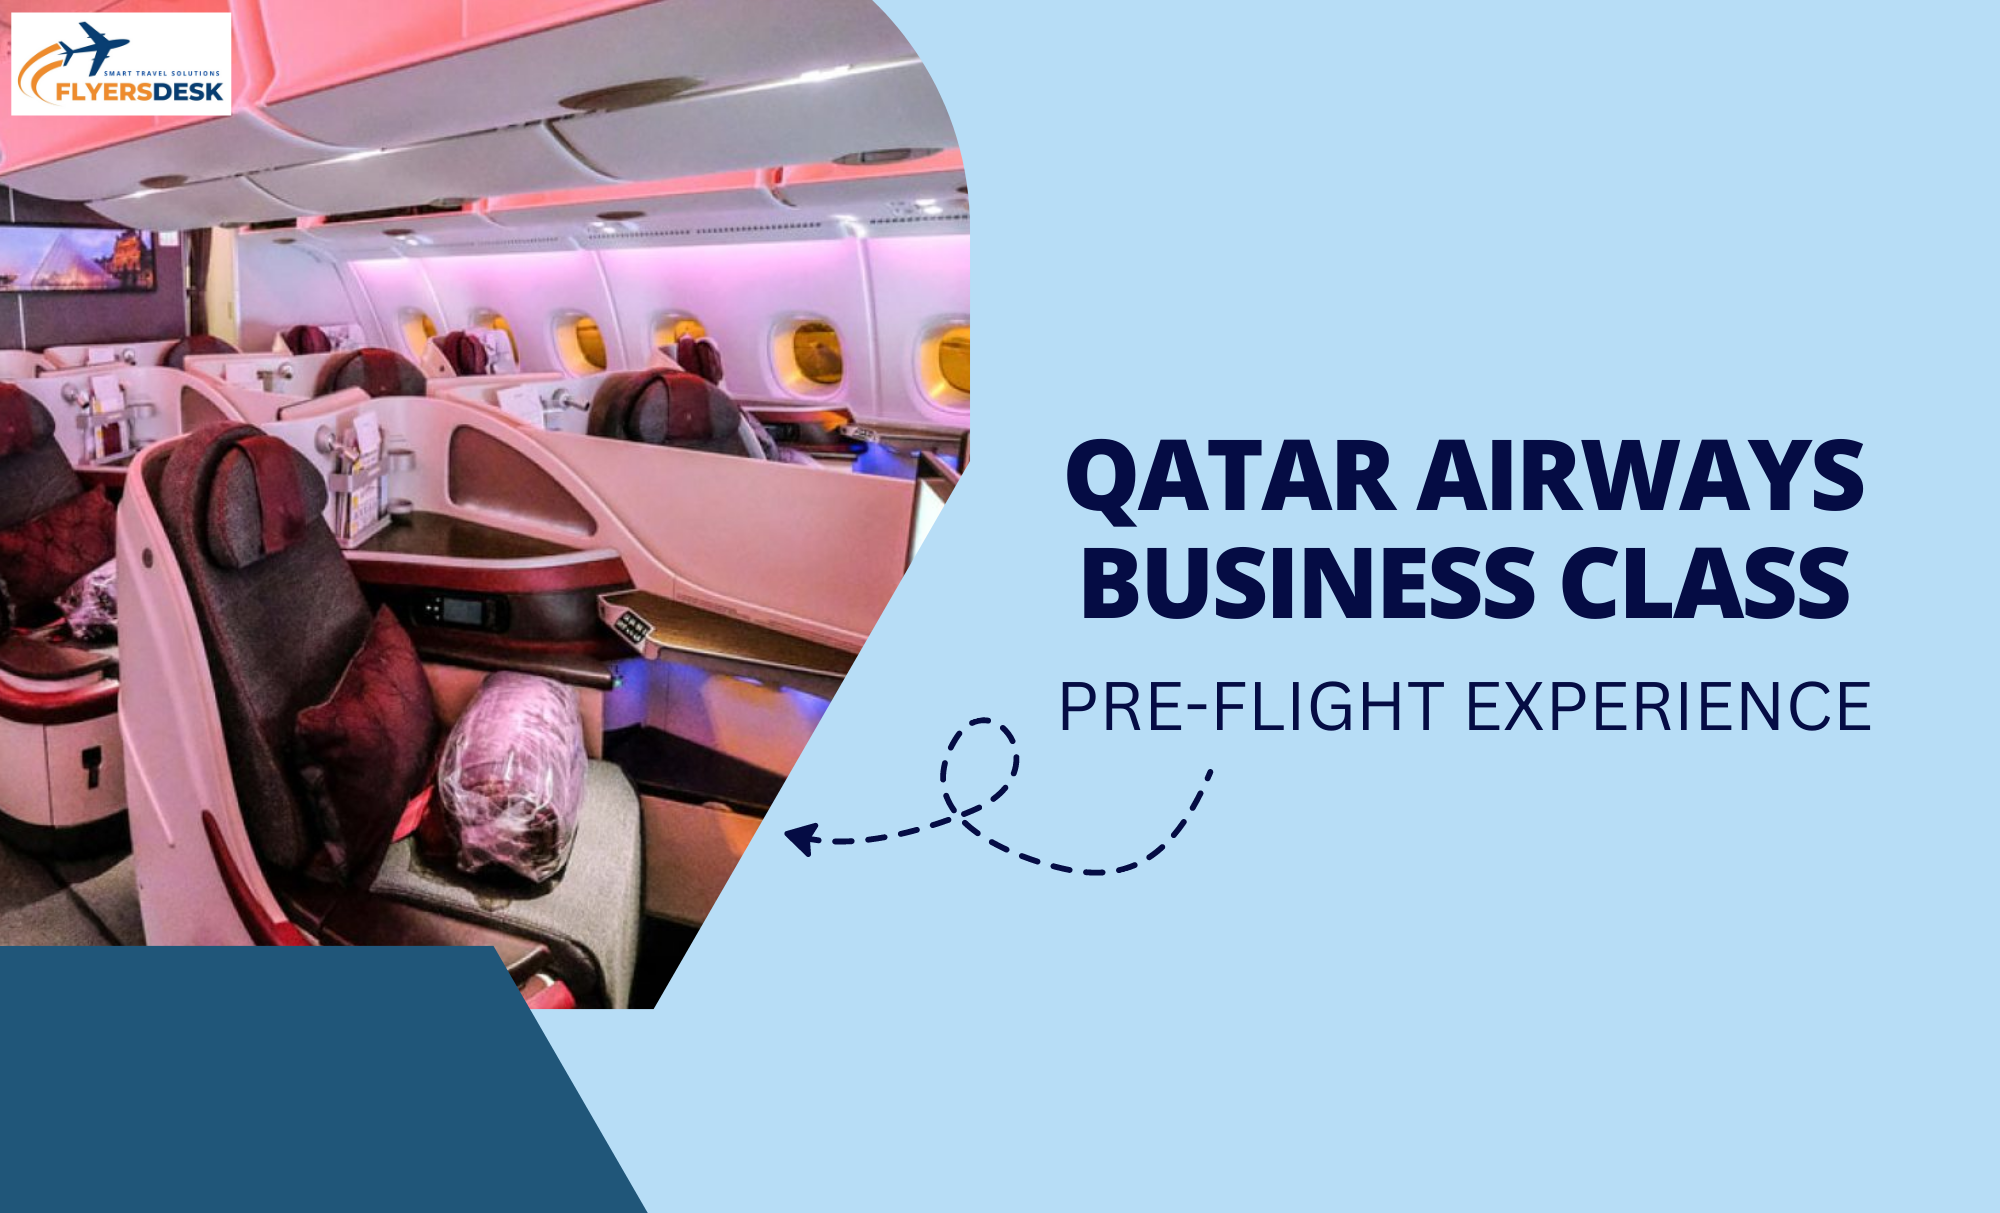 Qatar Airways Business Class: Pre-Flight Experience